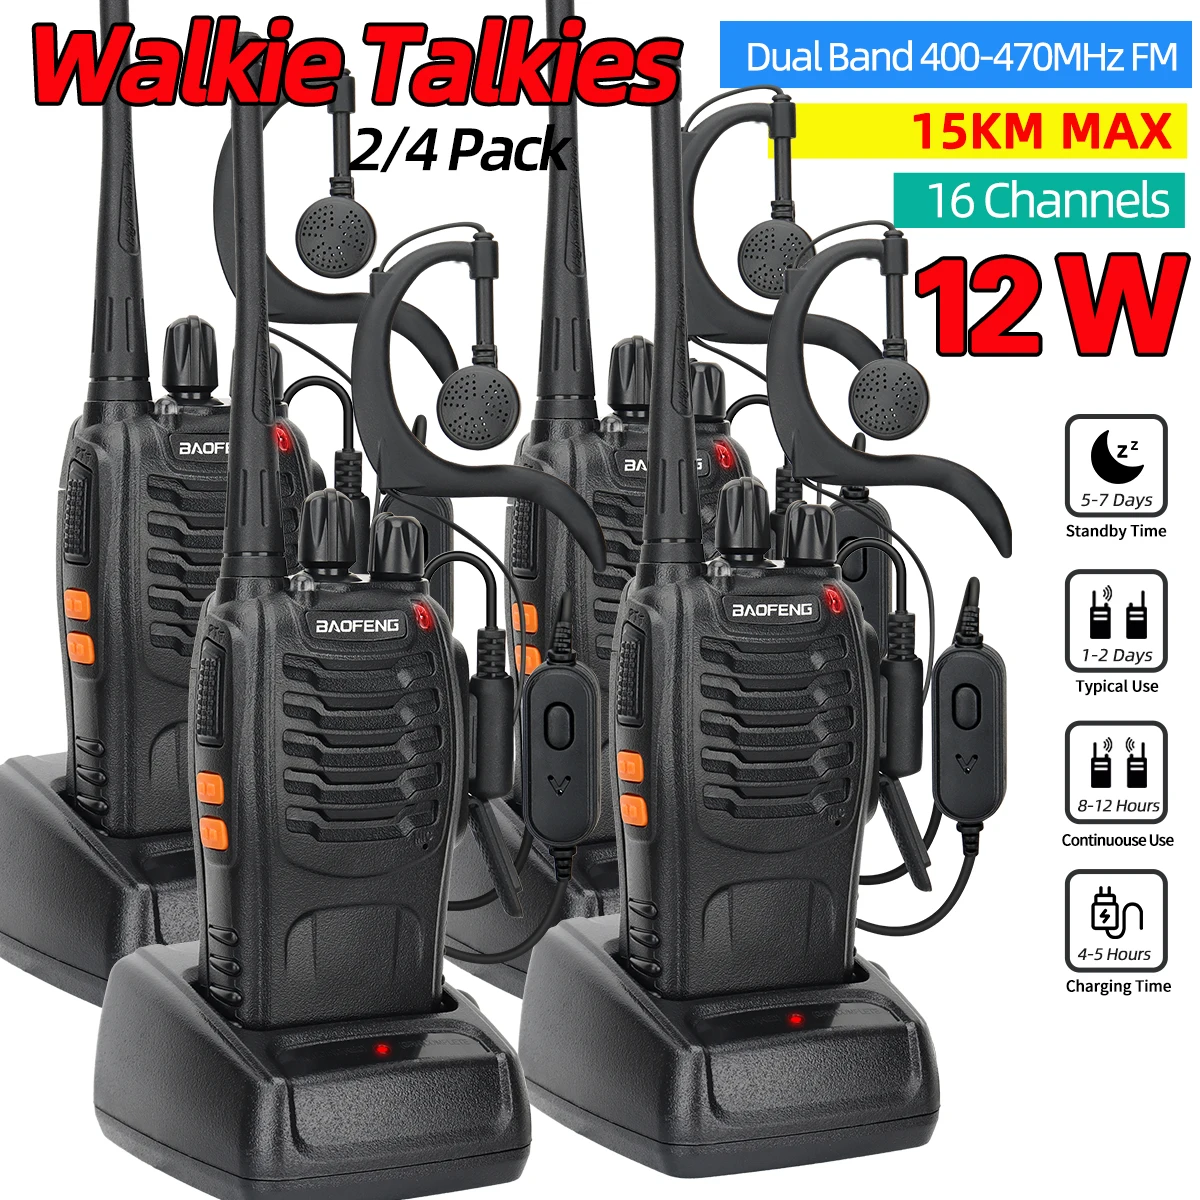 

5/12W 2PCS Baofeng BF-888S Walkie Talkie UHF 400-470MHz 888s 100km² Long Range Two Way ham Radios Transceiver USB for Hunting